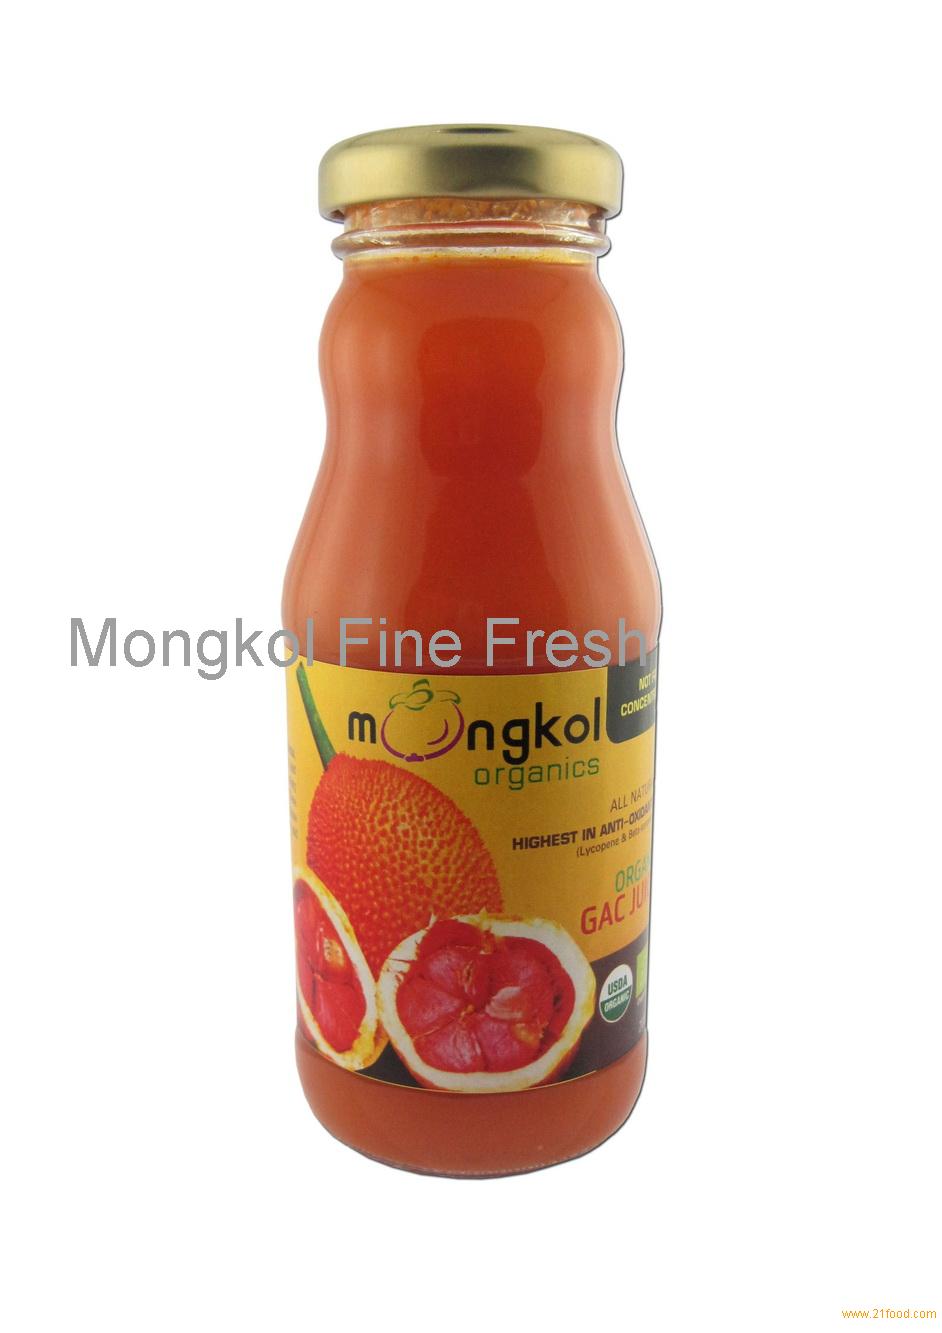 Organic Gac Fruit Juice products,Thailand 